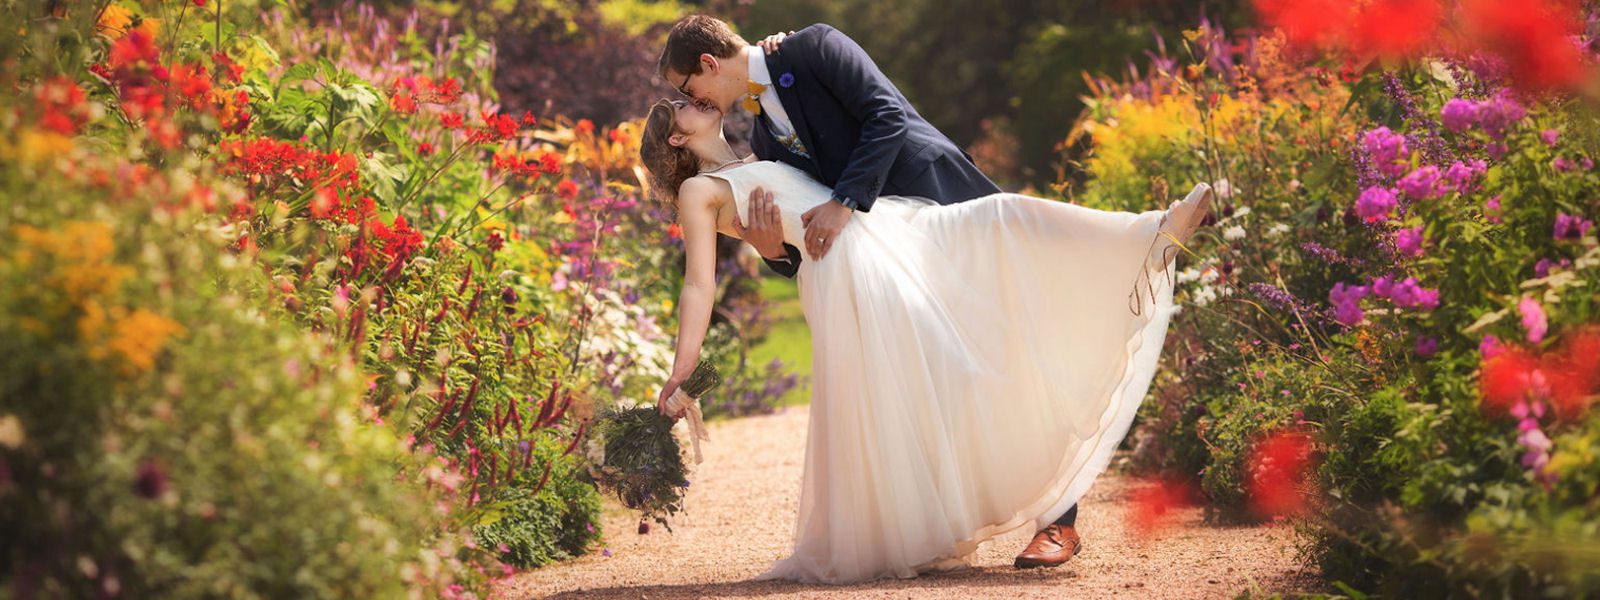 blush tulle bespoke wedding dress Felicity westmacott with bright flowers